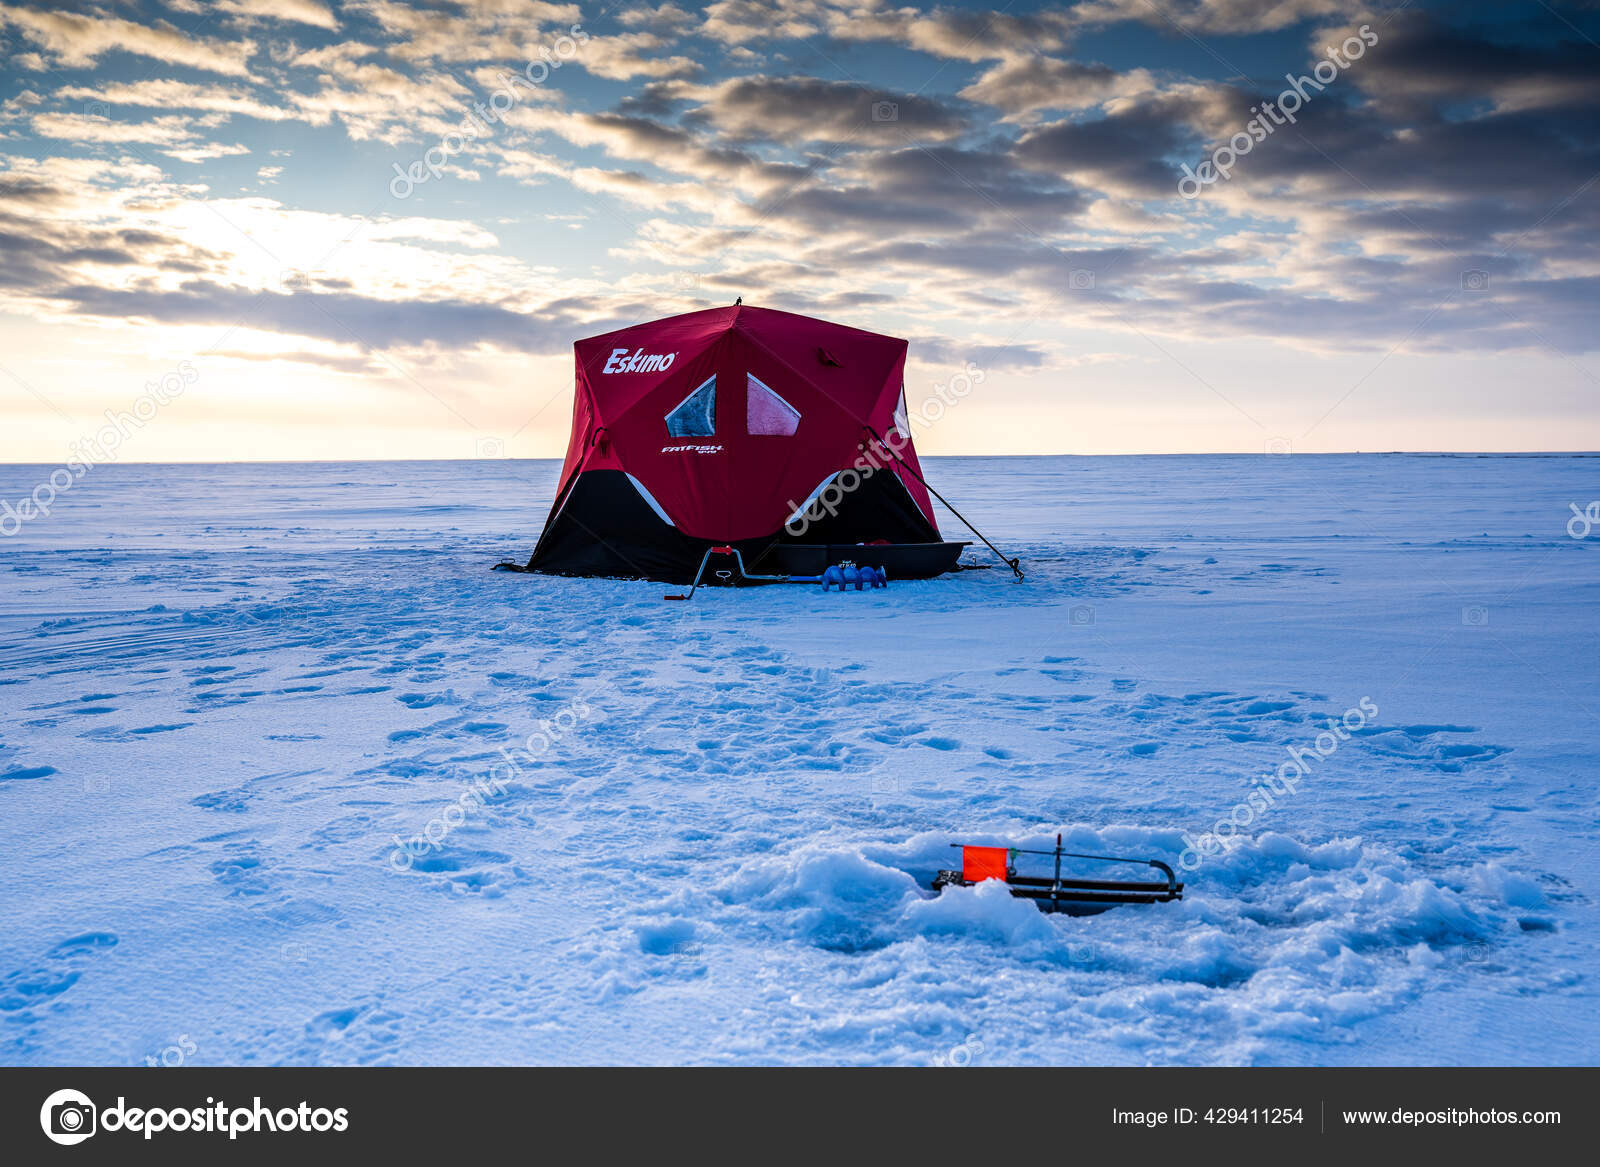 Brooks Alberta Canada February 2020 Ice Fishing Tent Sits Lake